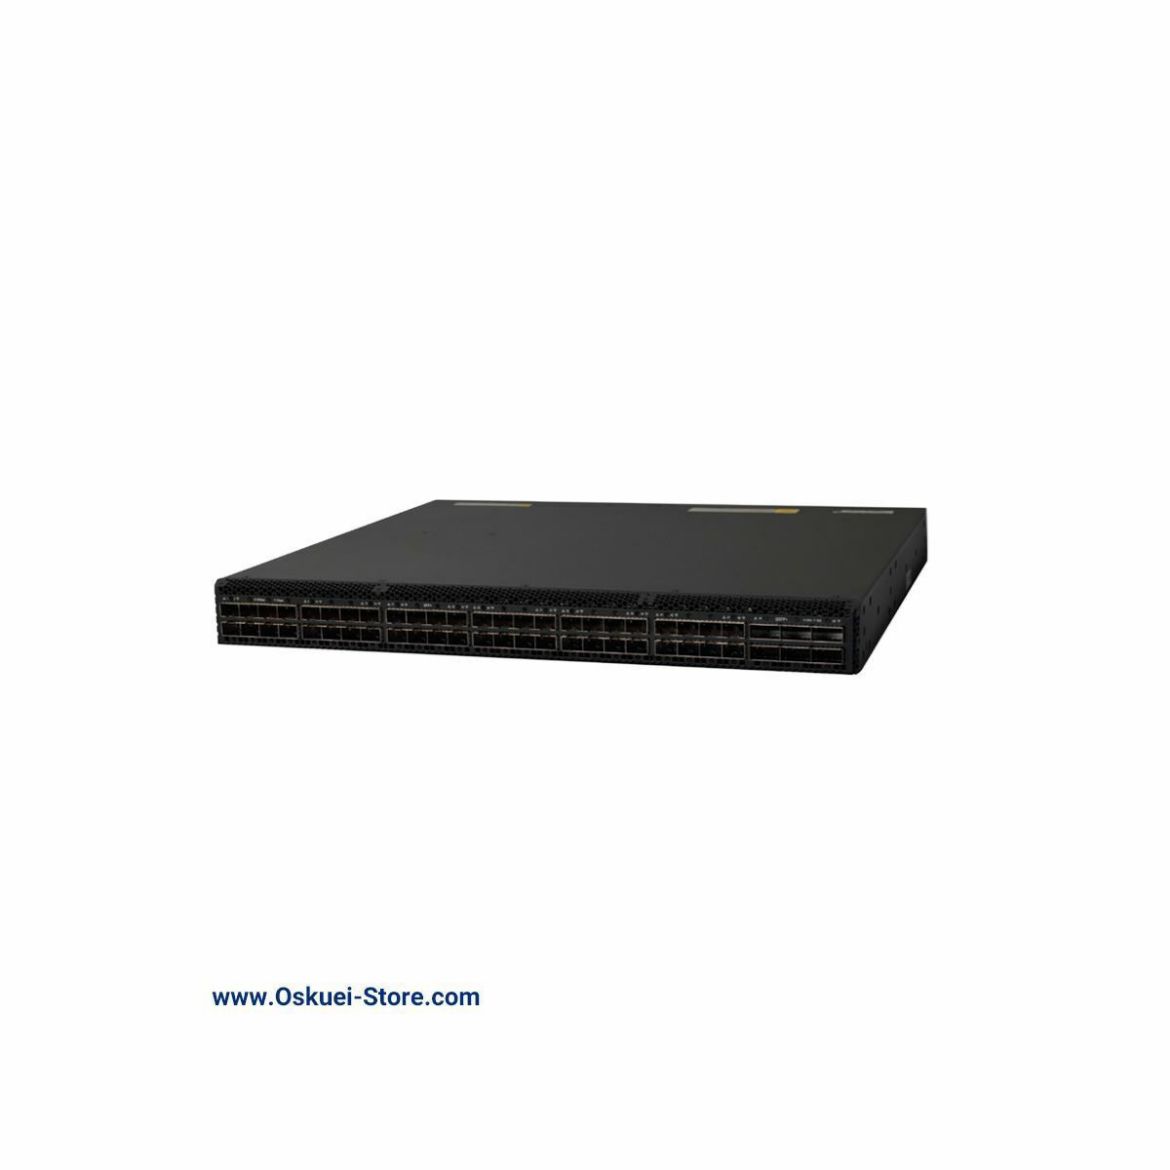 NEC QX-S6648XP-6Q Network Switch